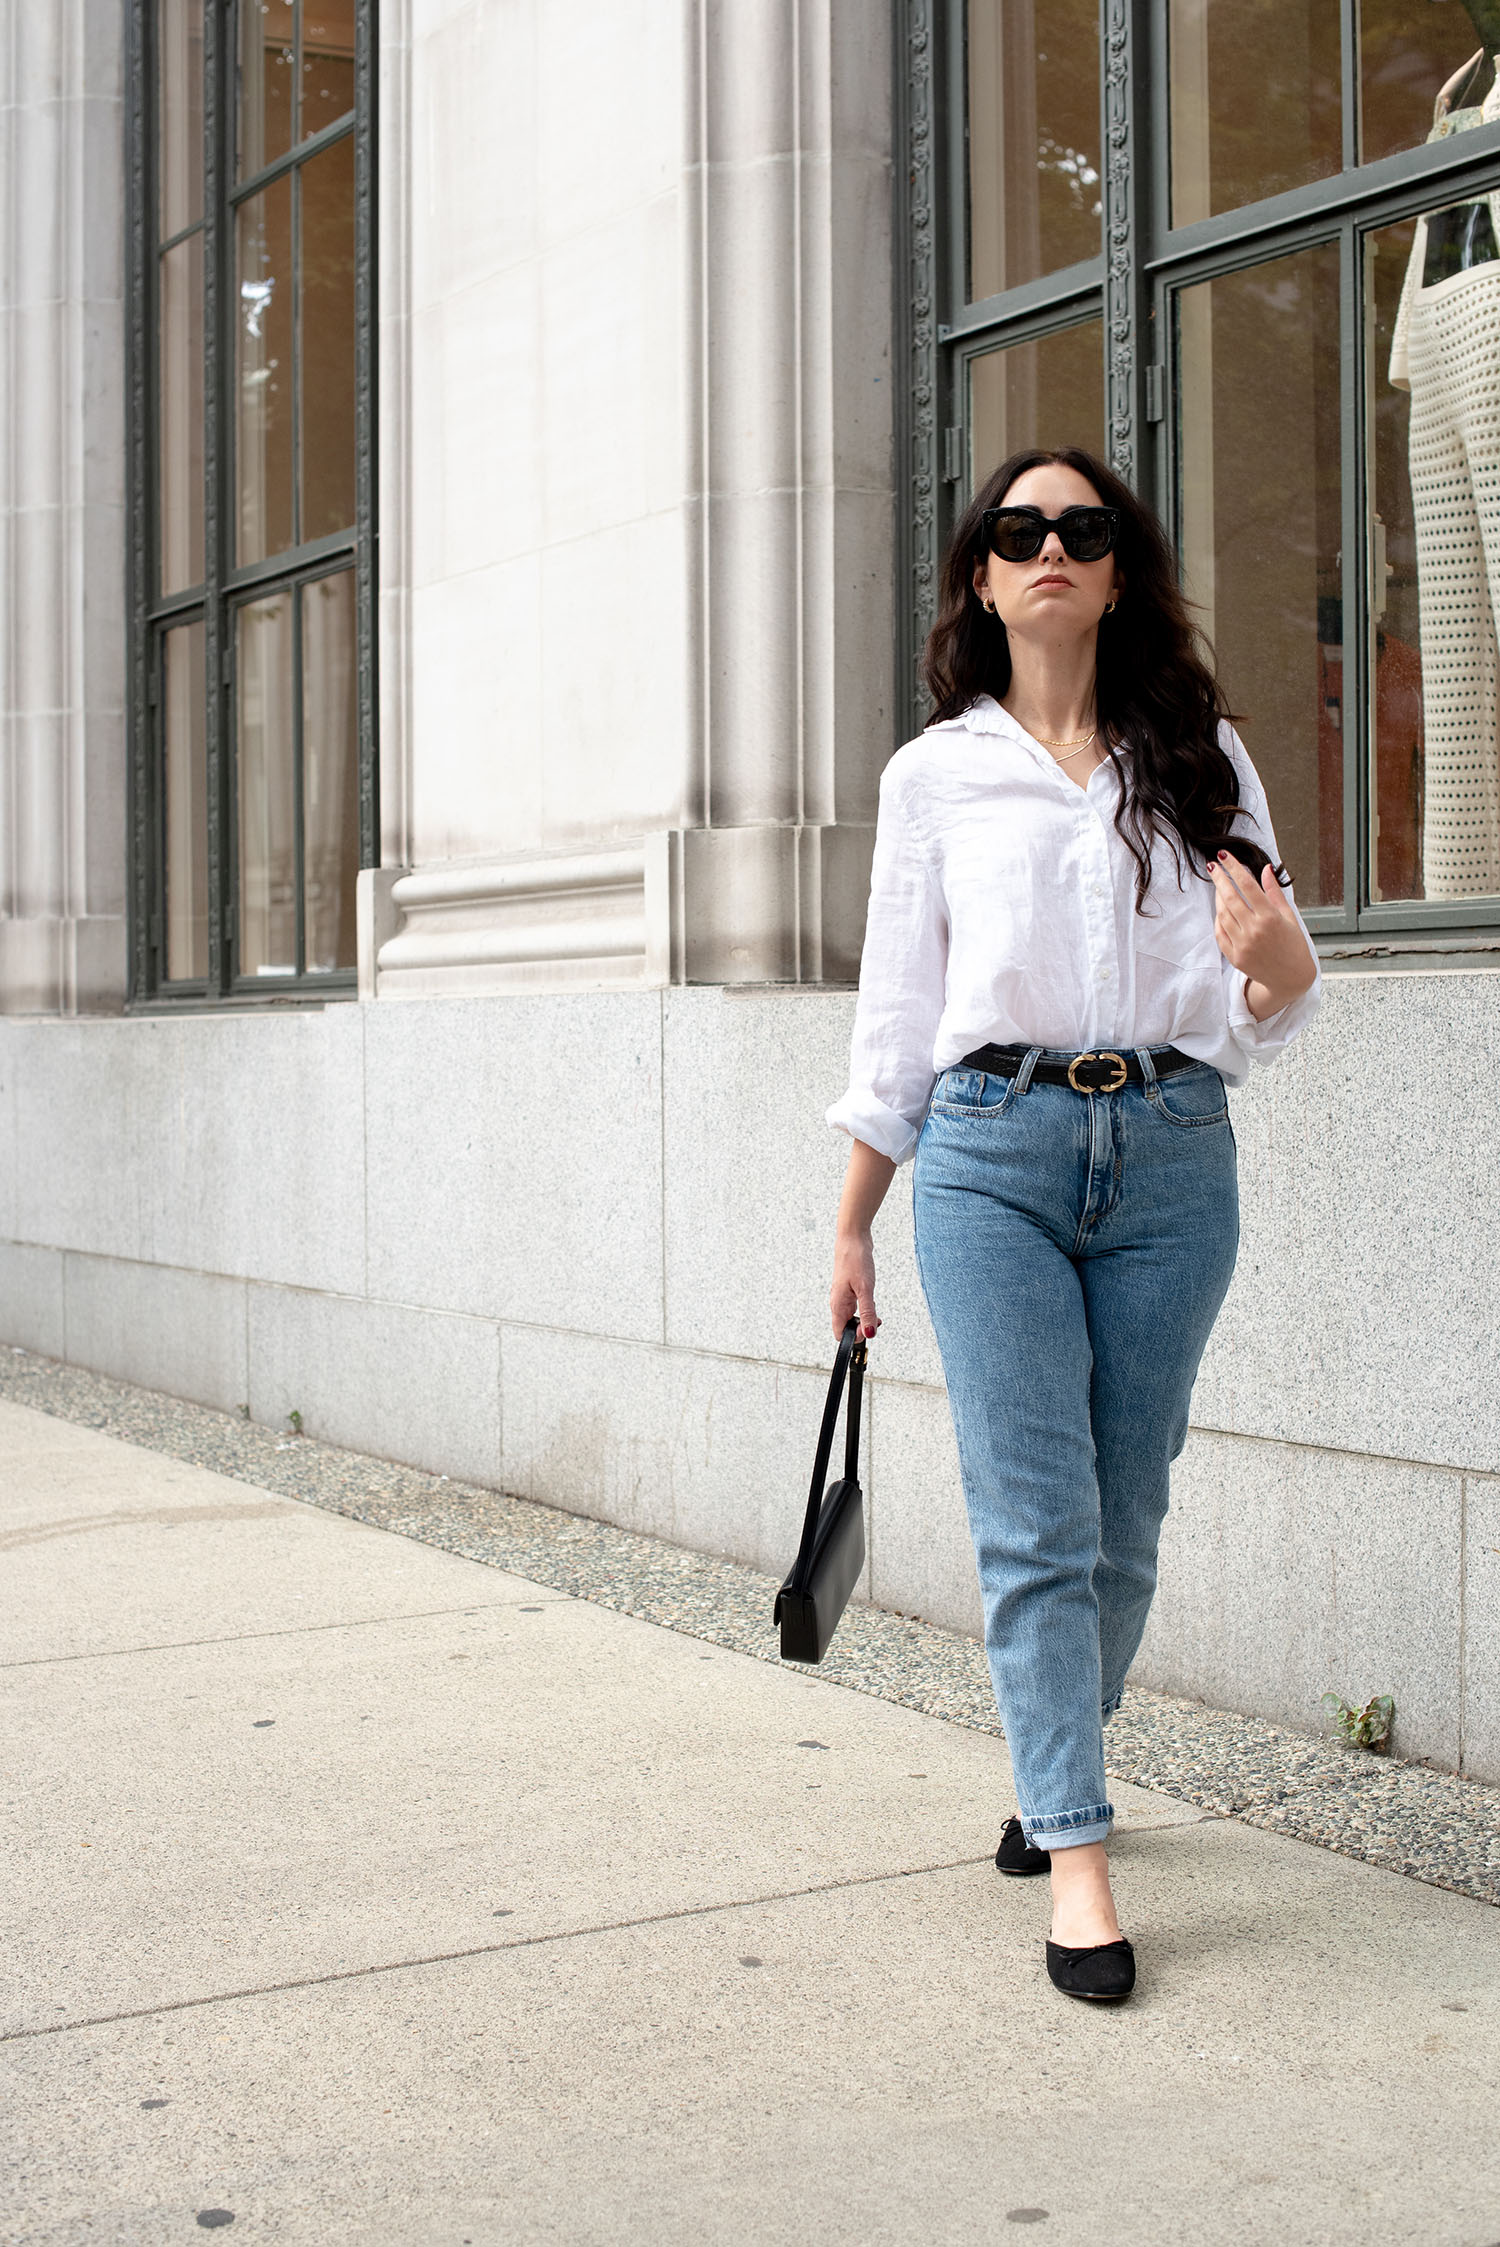 Coco & Vera - H&M linen shirt, Zara jeans, Flattered mules